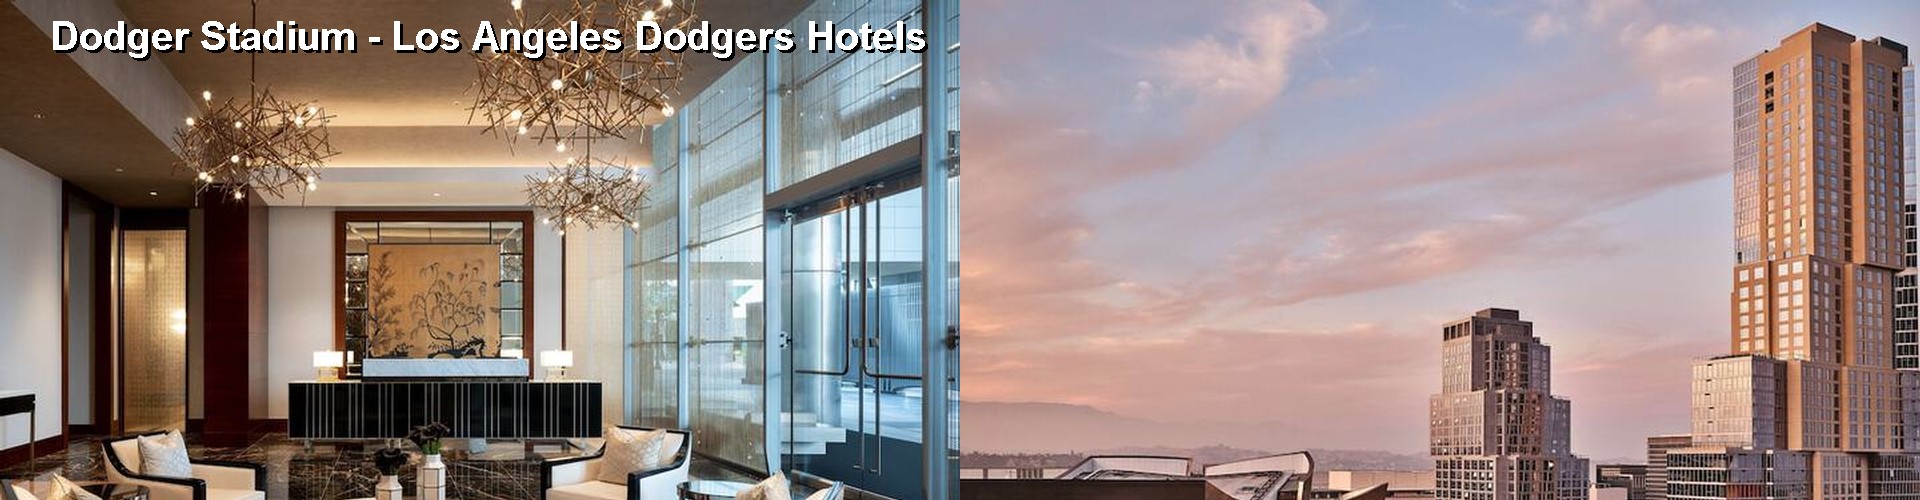 5 Best Hotels near Dodger Stadium - Los Angeles Dodgers